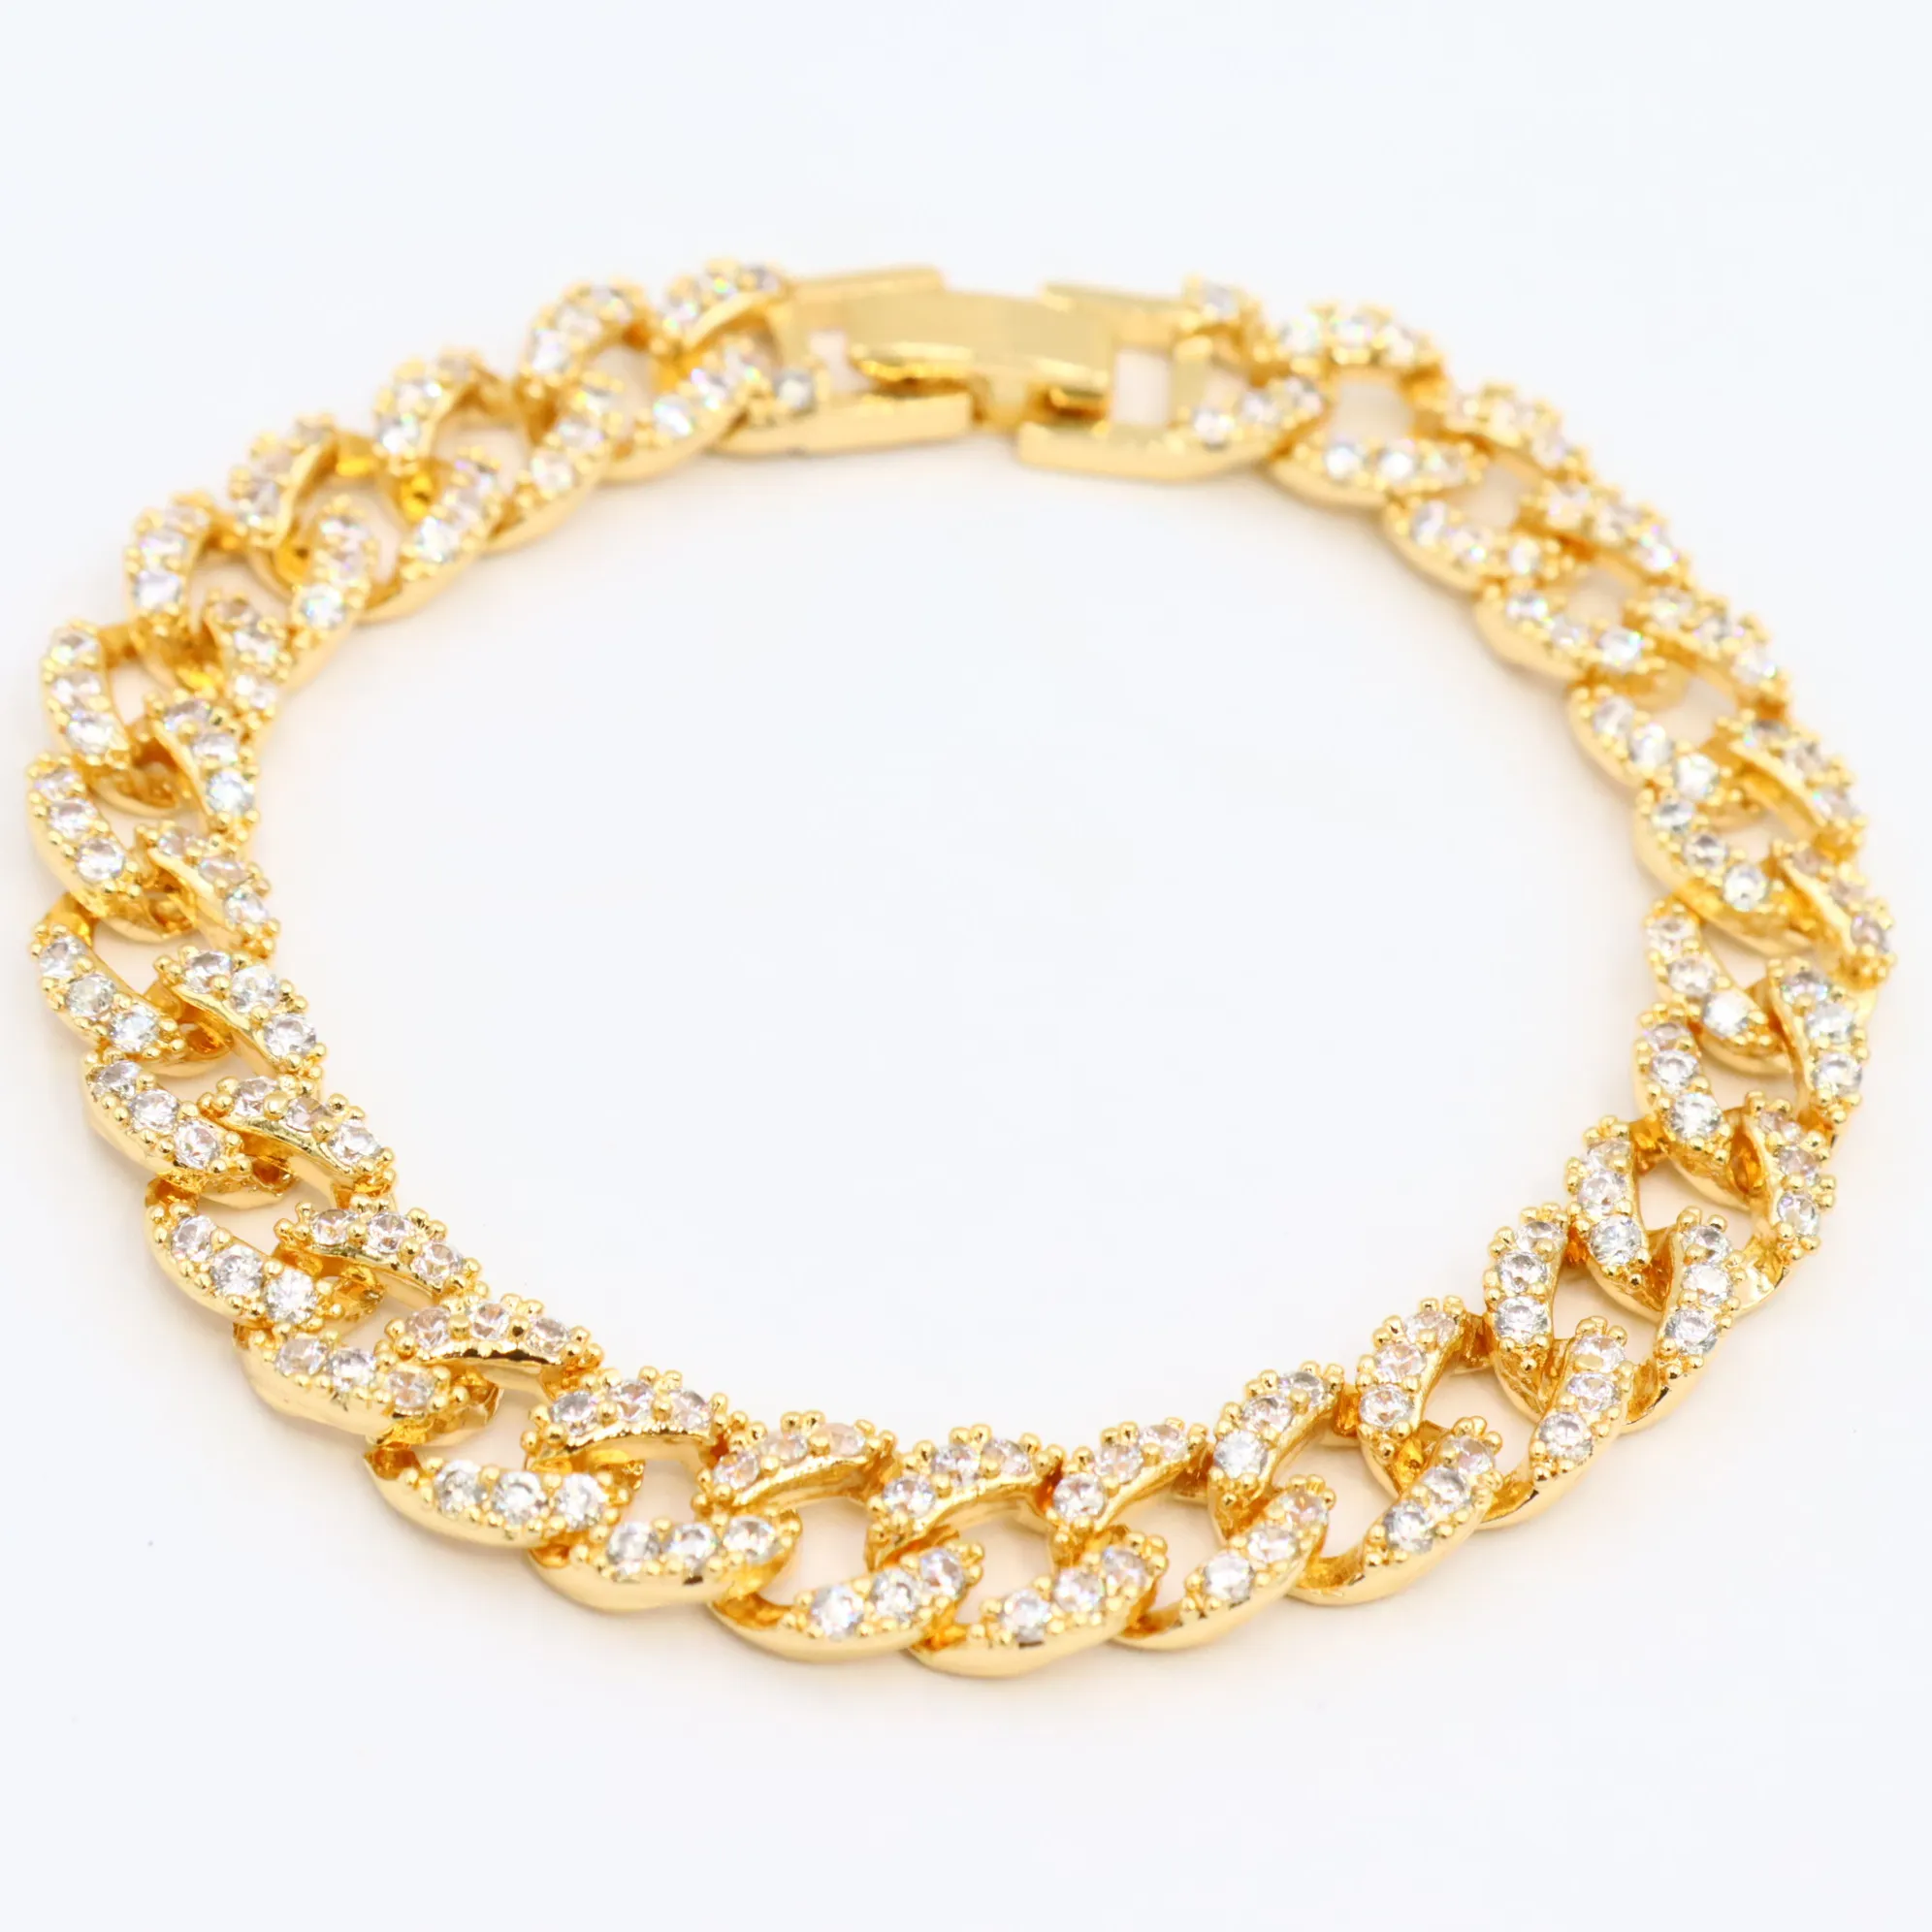 Womens Gold bracelet elegant design Studded with Cubic Zirconia Stones